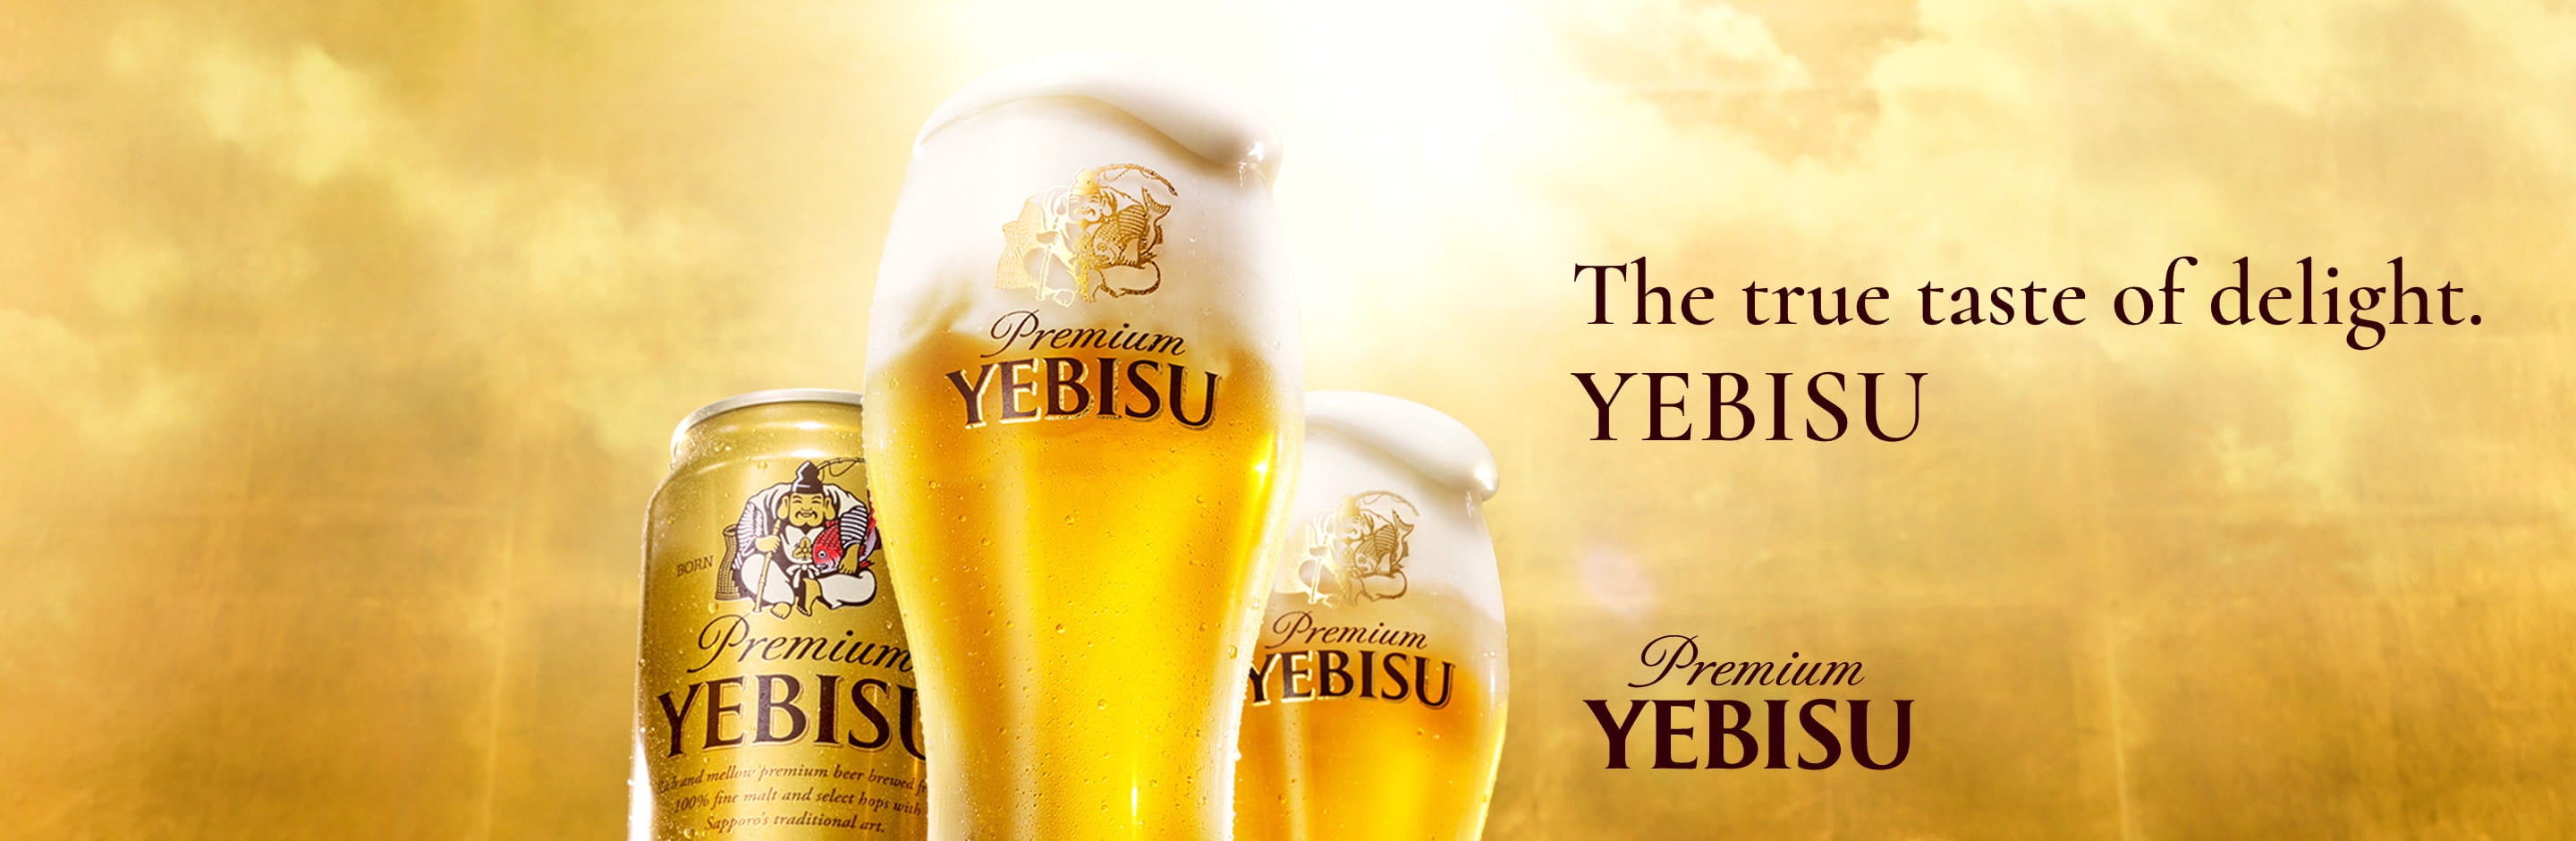 Yebisu Beer in Singapore | Sake Inn